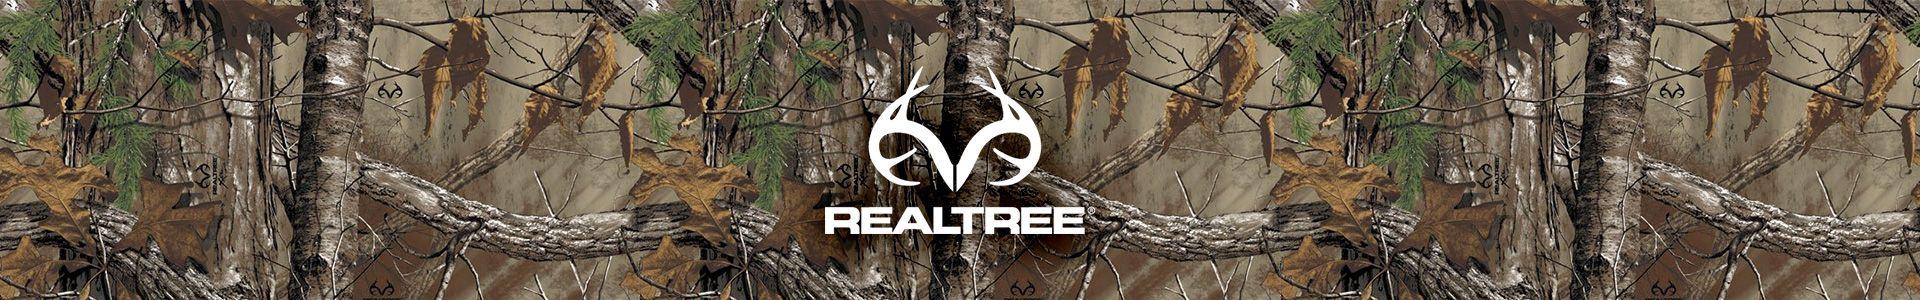 Realtree Camo Logo - Camo